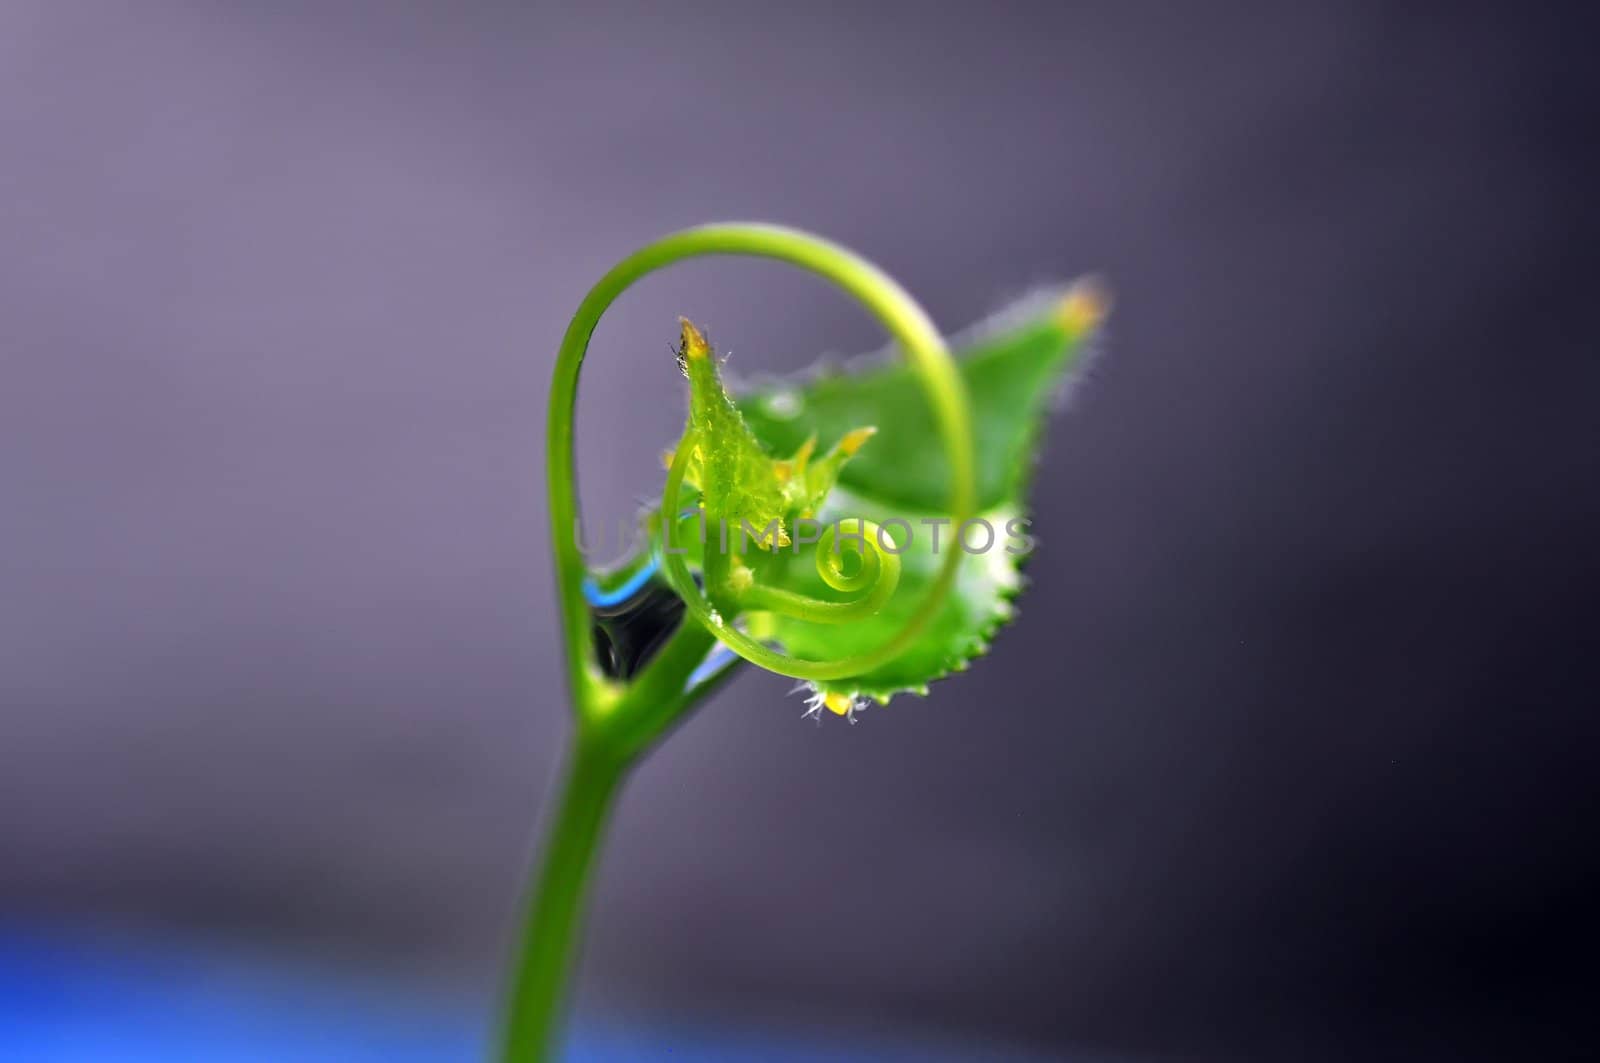 Green ivy by phanlop88